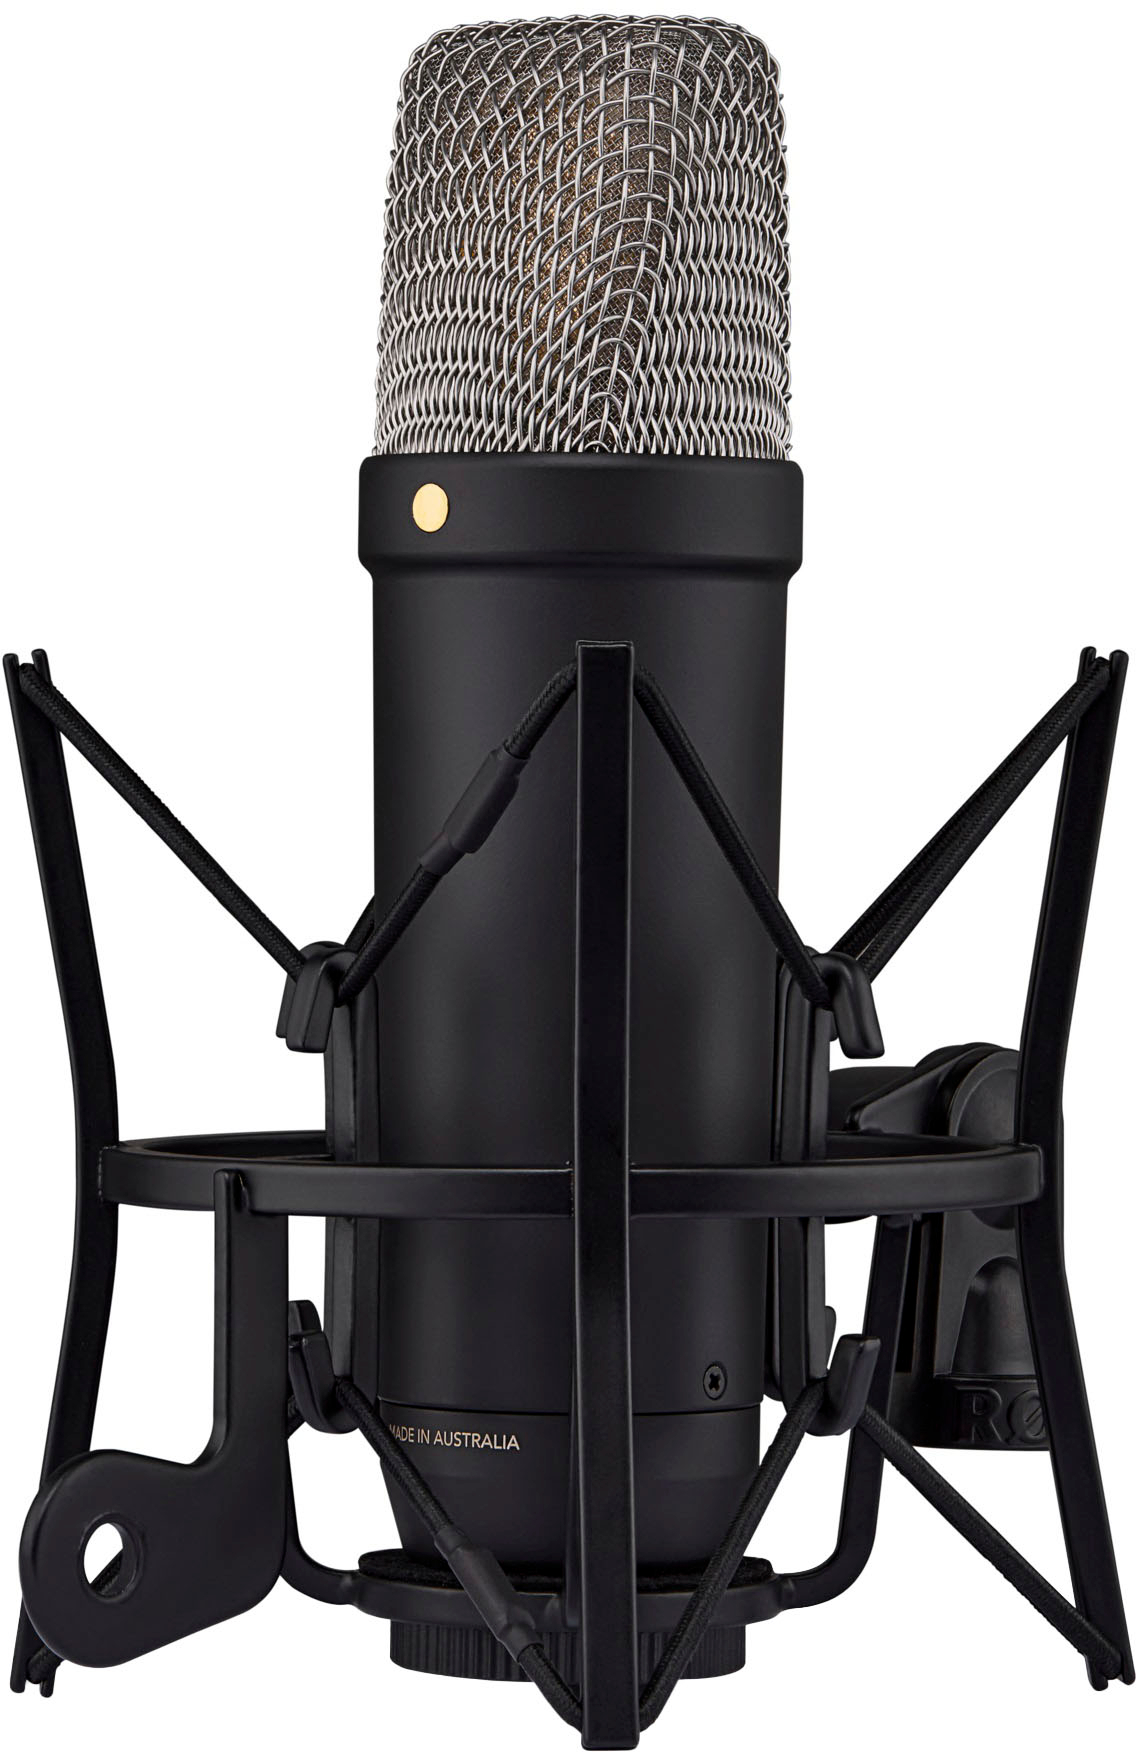 Dodd Camera - RODE NT1 5th Generation Studio Condenser Microphone - Black